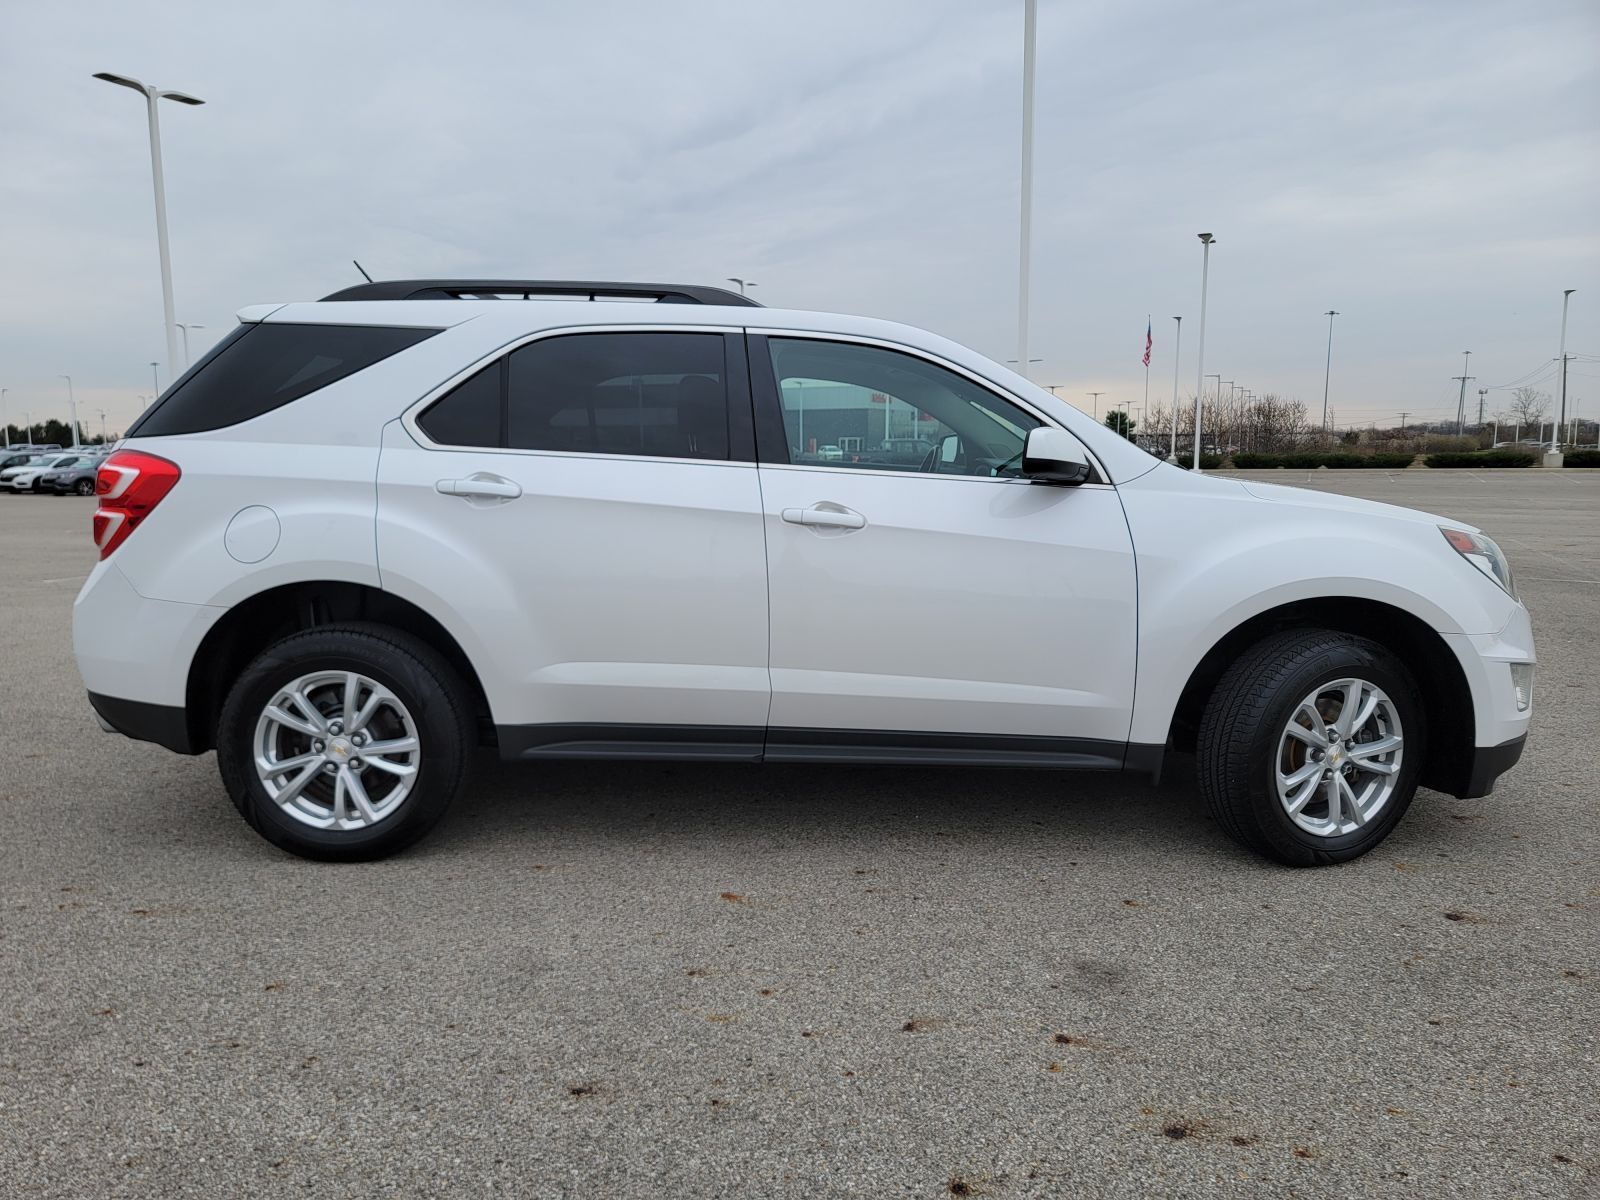 Used, 2016 Chevrolet Equinox LT, White, 13920-12